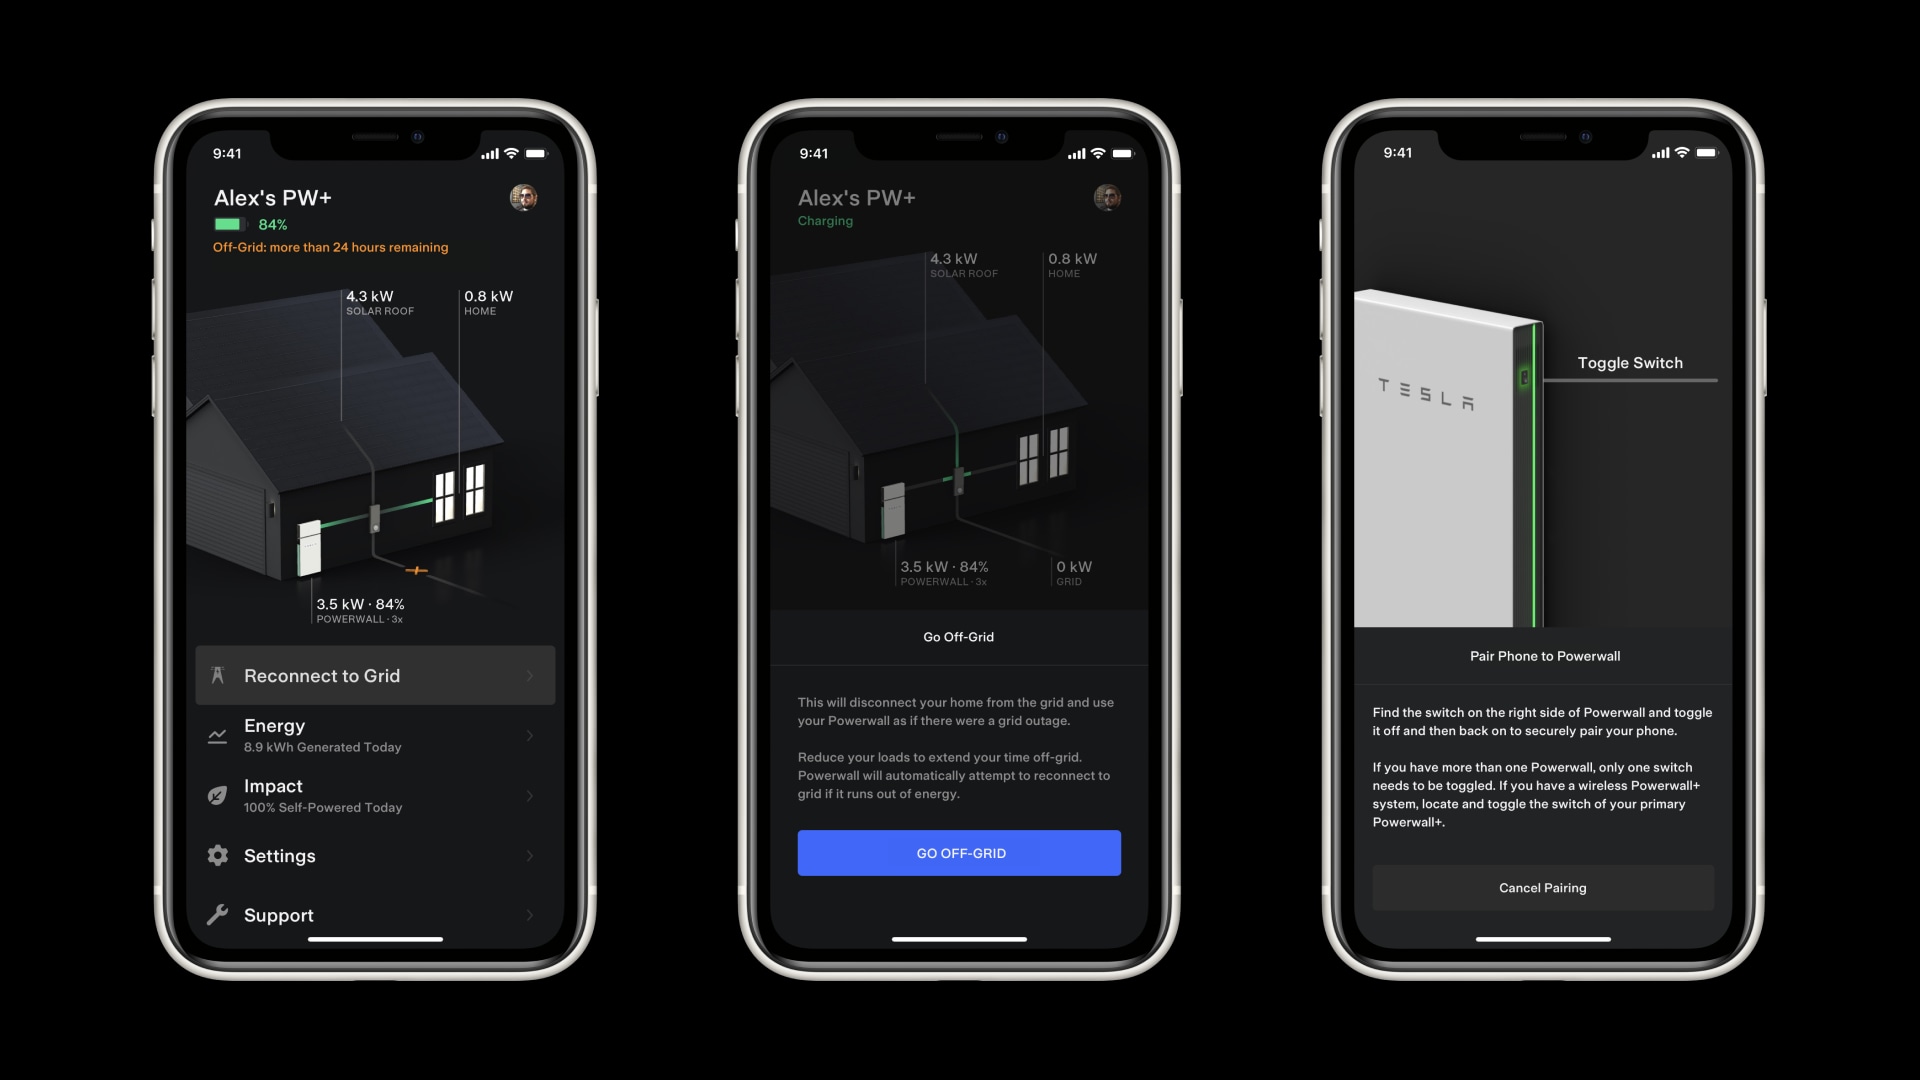 Tesla Mobile App Go Off-Grid Feature